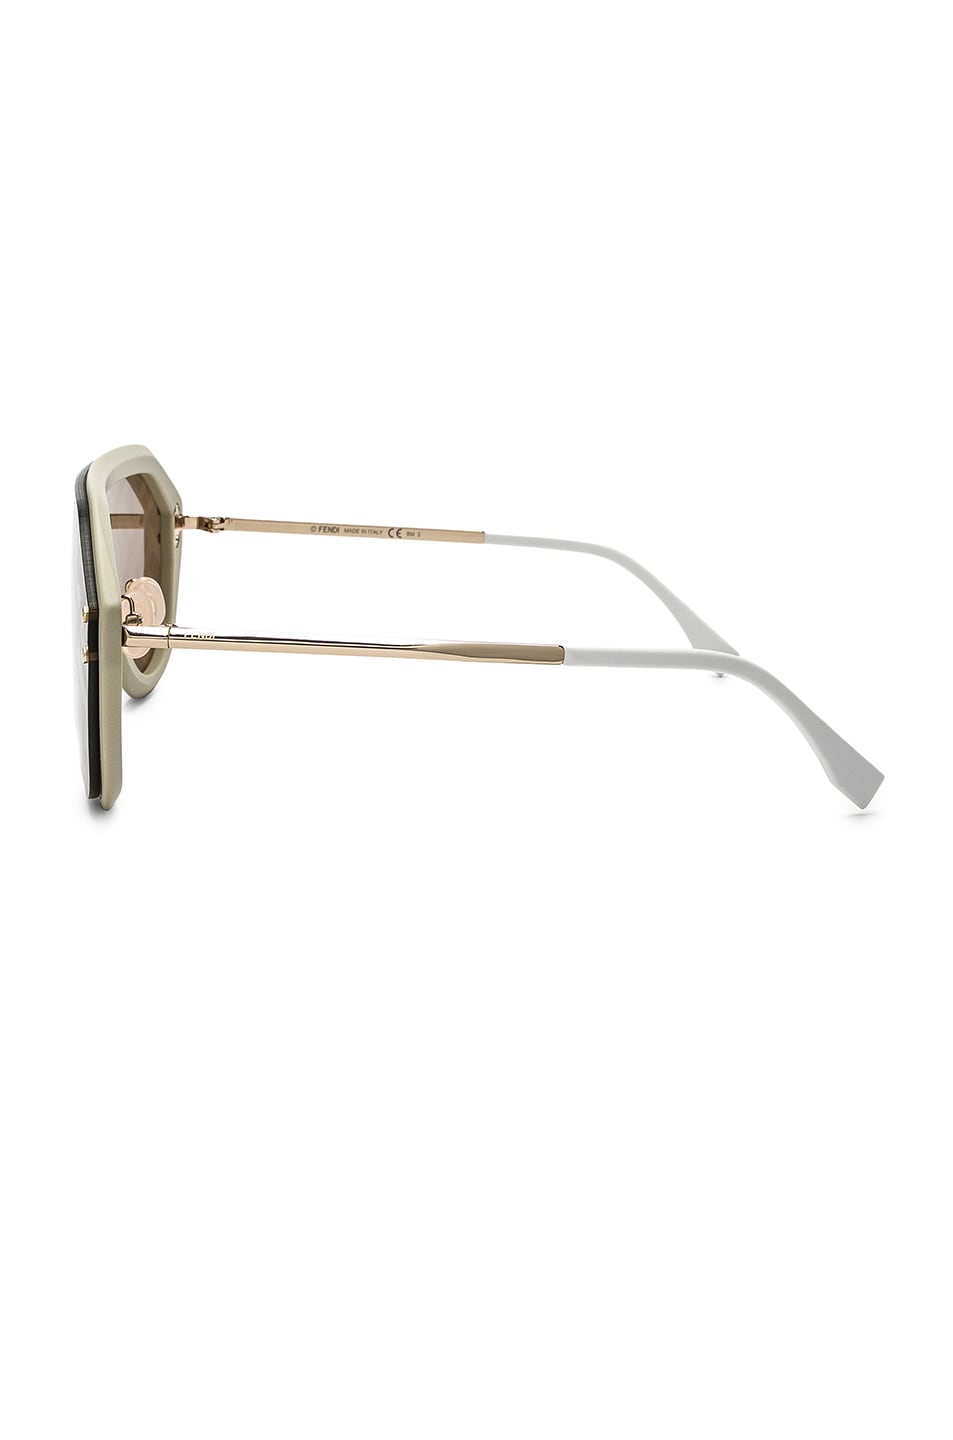 Fendi Logo Face Sunglasses in Beige & Gold Decor | FWRD